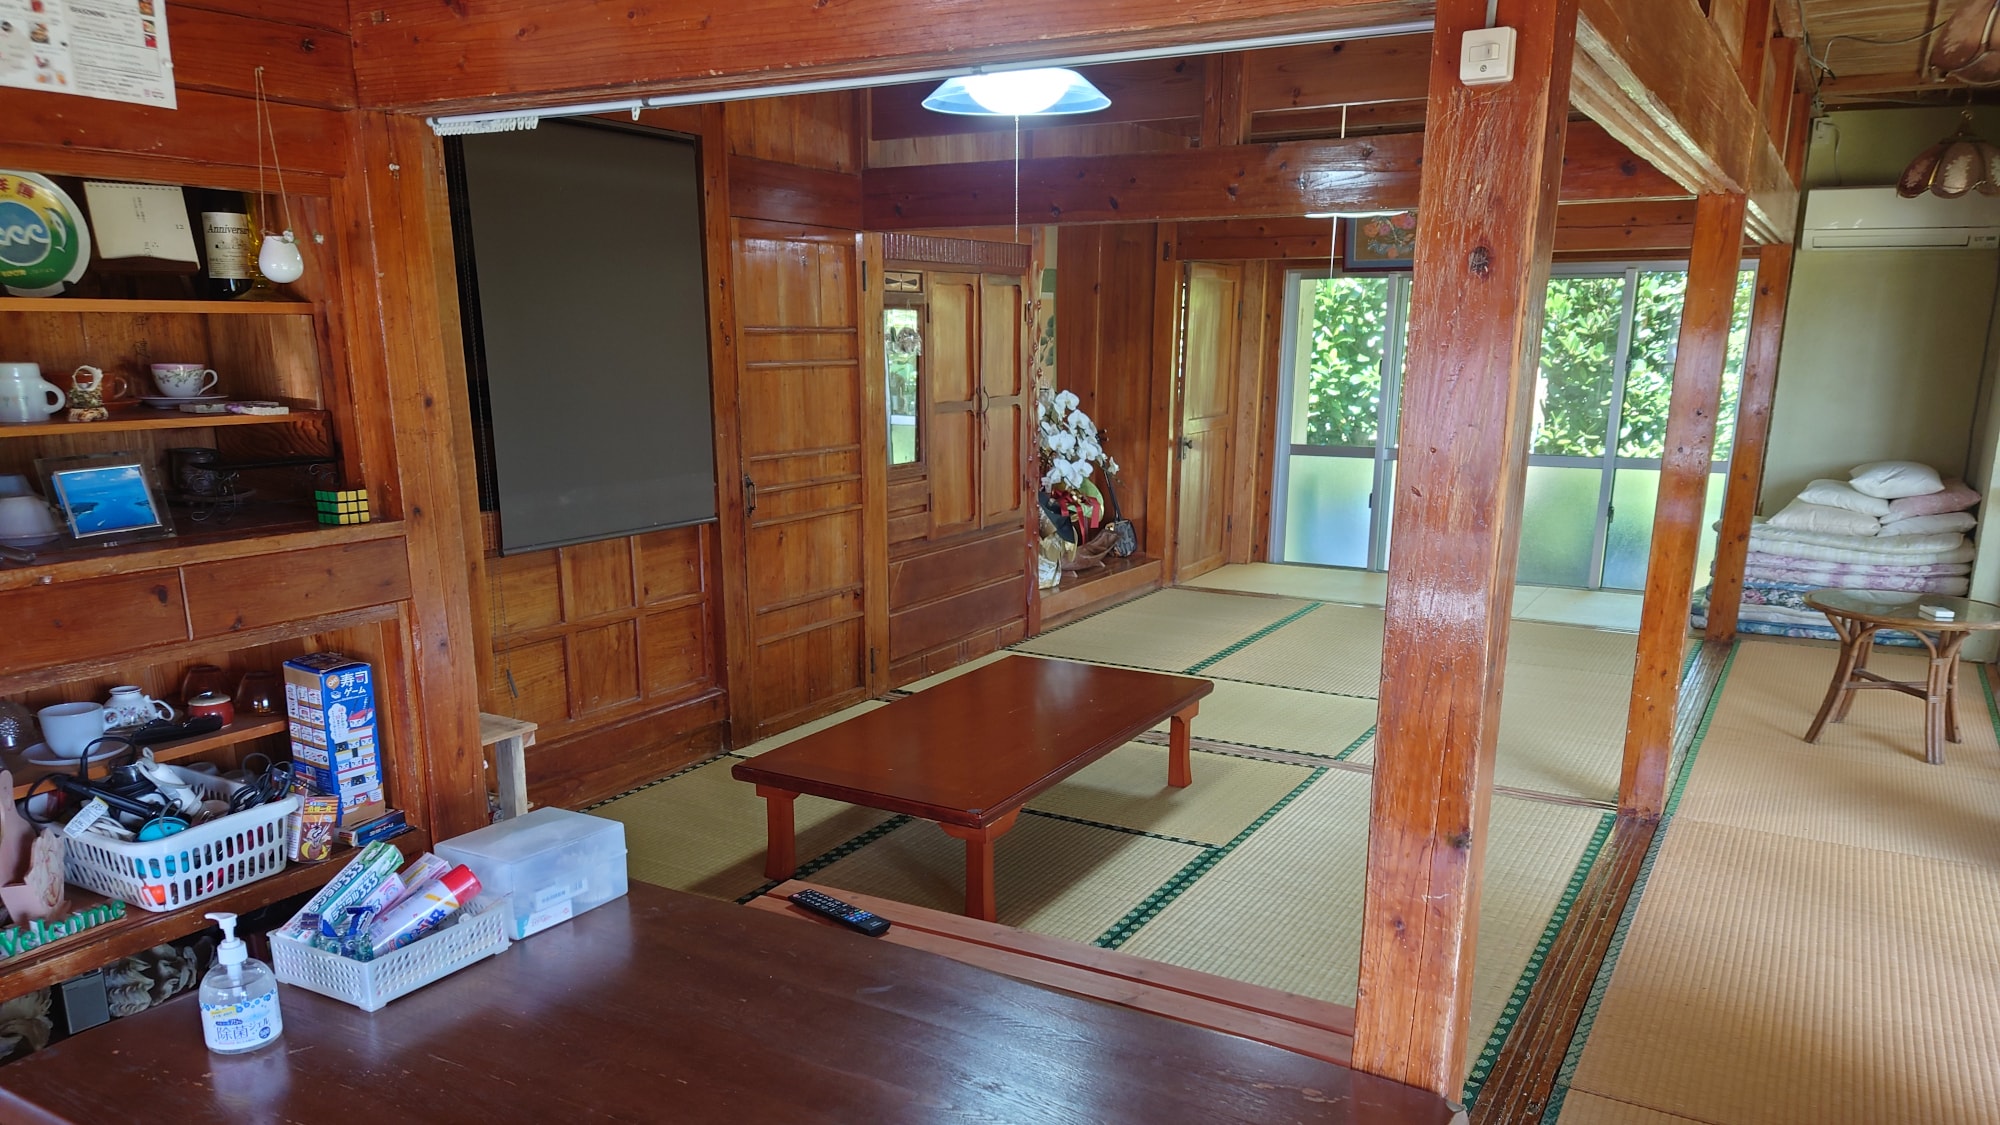 ・ A calm tatami room